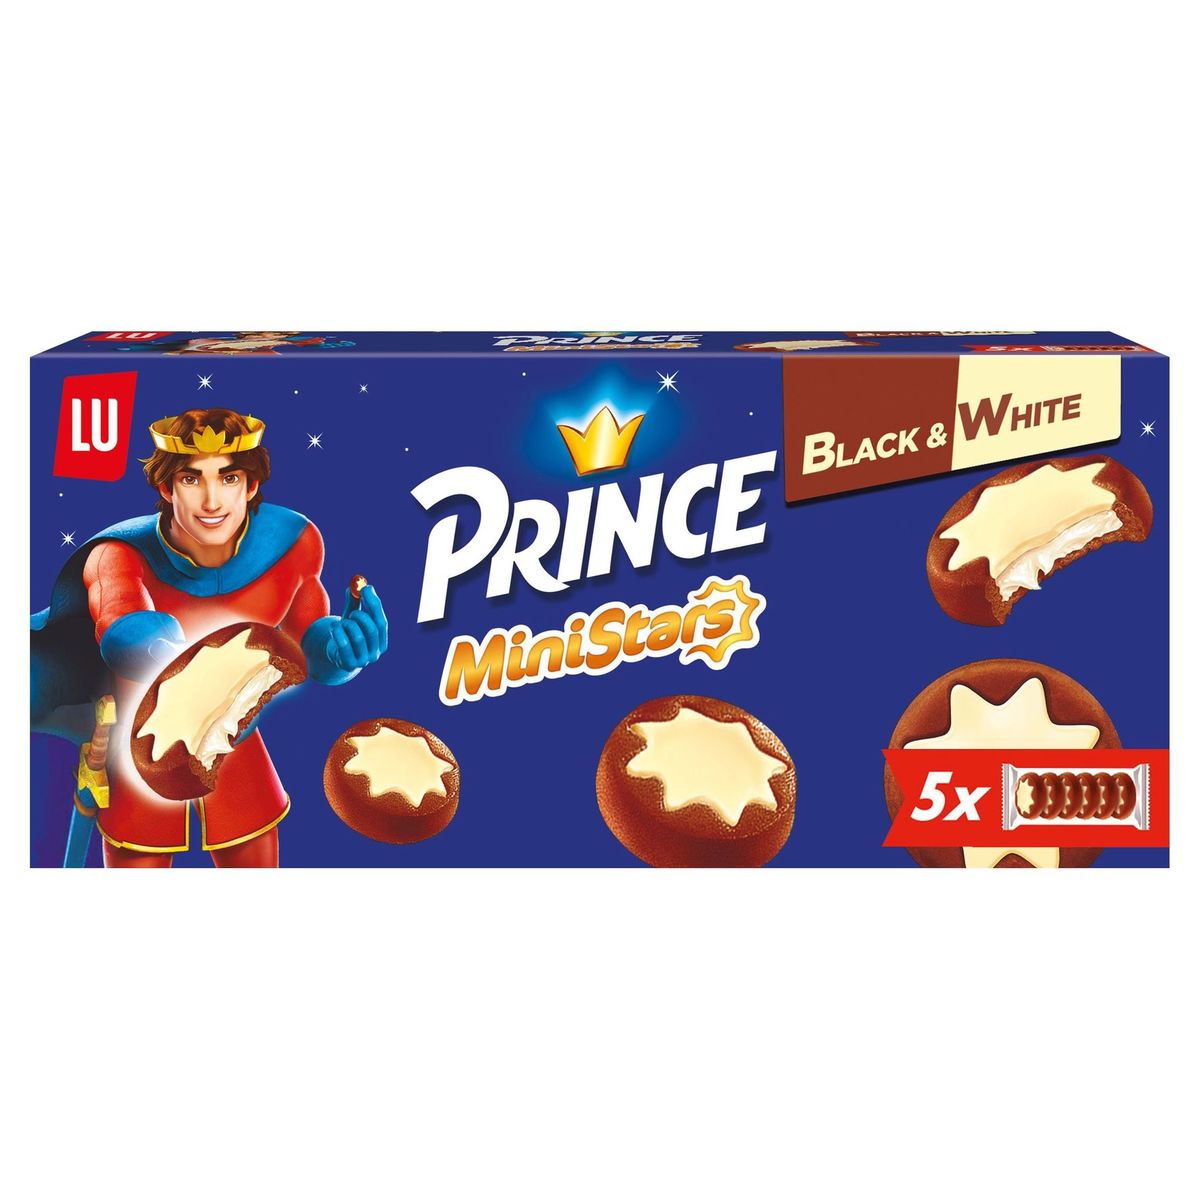 LU Prince MiniStars Black&White Biscuits 5 Sachets 187 g